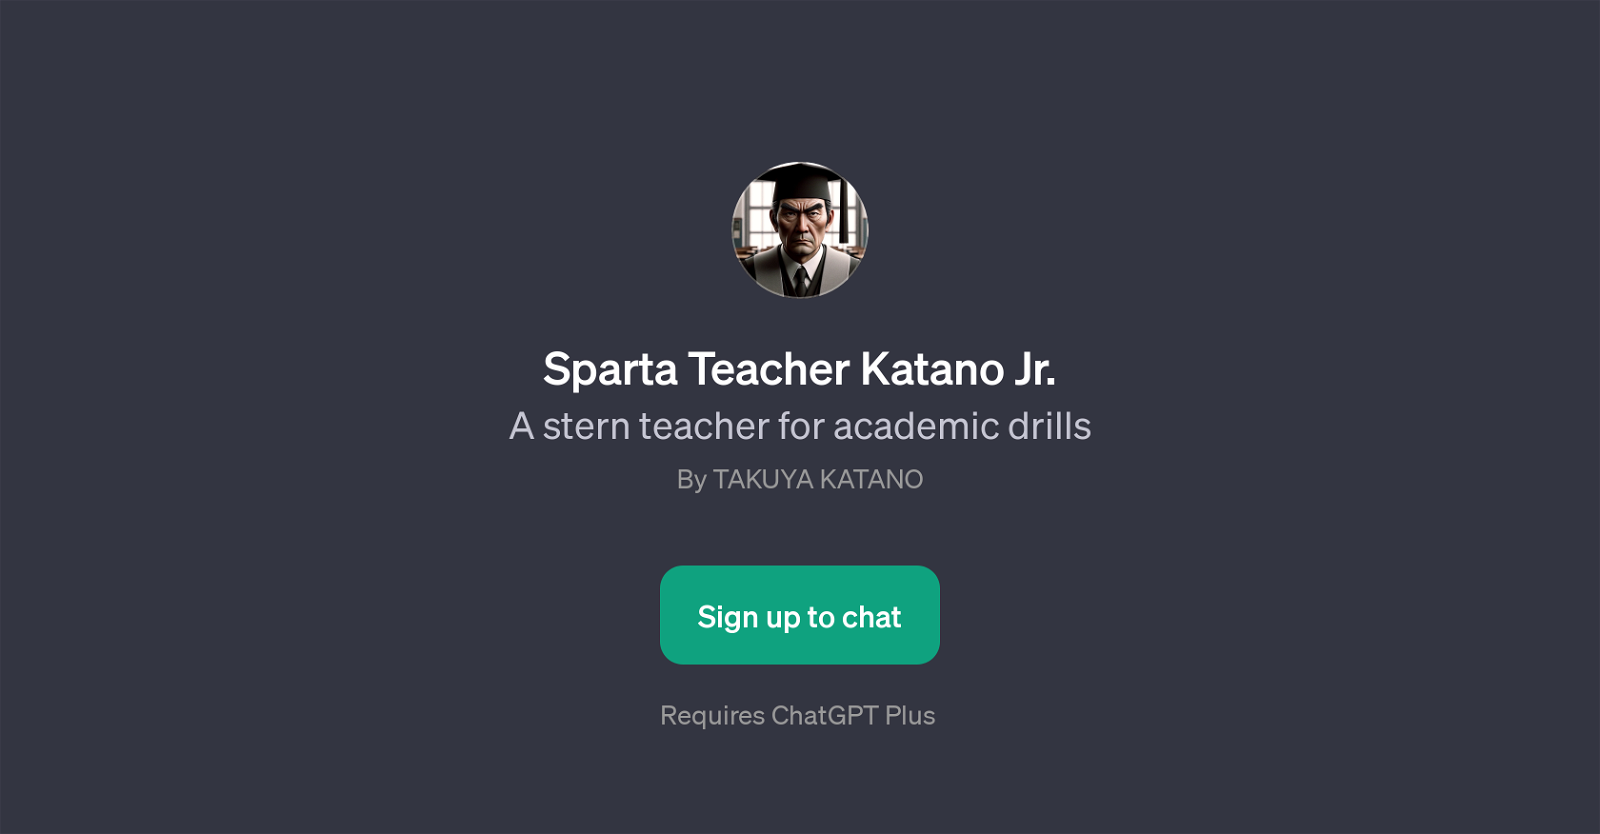 Sparta Teacher Katano Jr. website